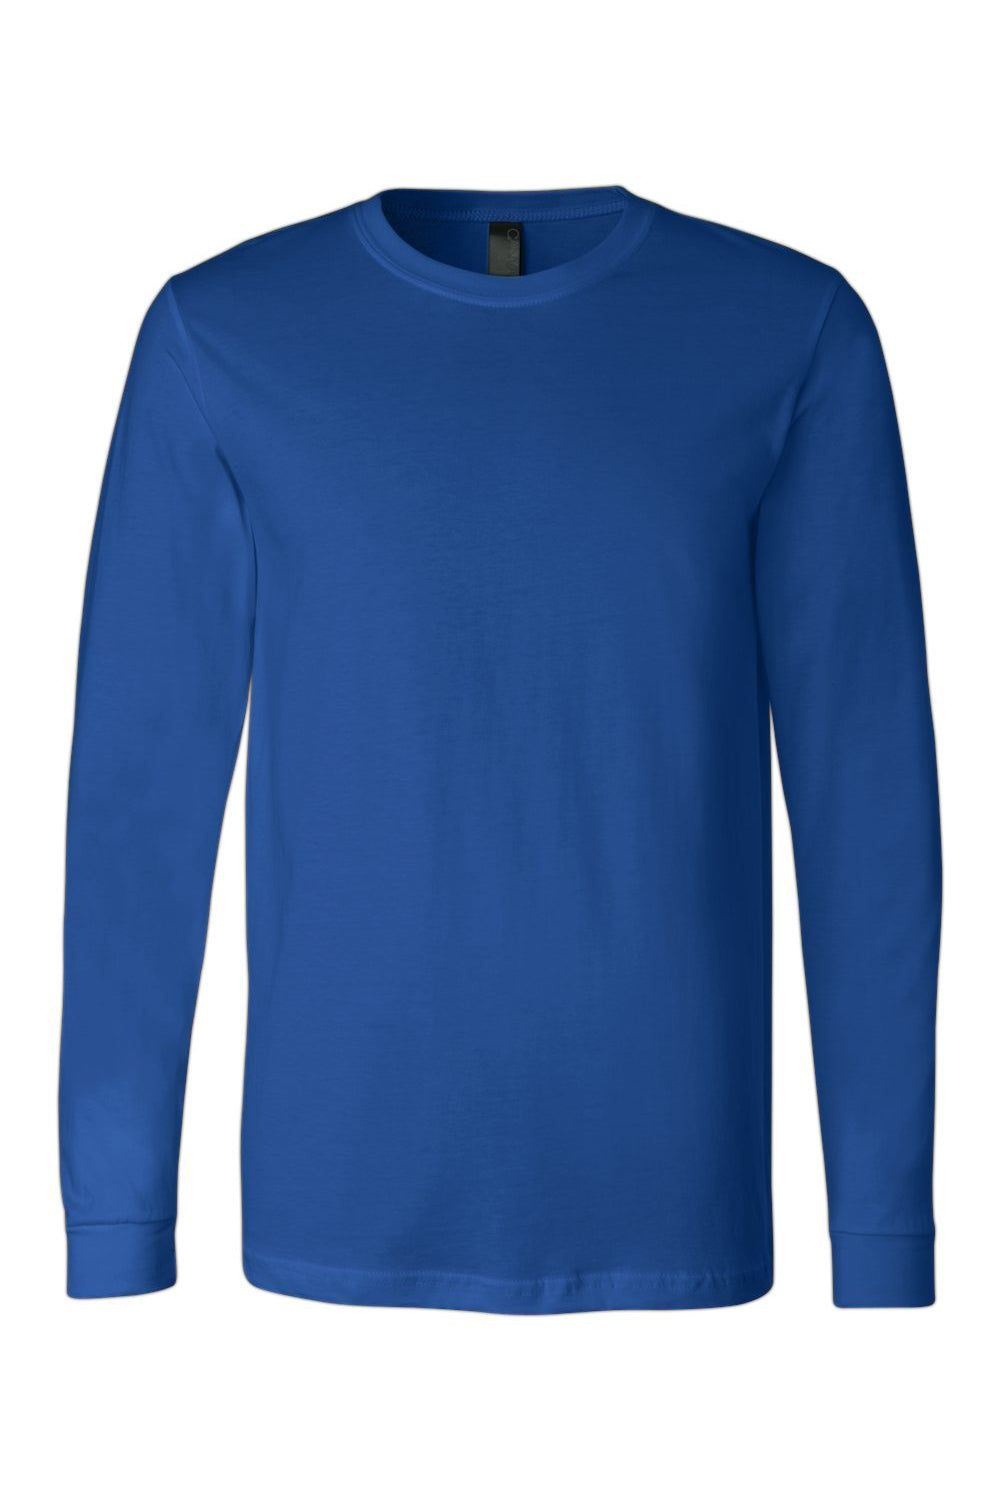 Bella + Canvas BC3501/3501 Mens Jersey Long Sleeve Crewneck T-Shirt True Royal Blue Triblend Flat Front